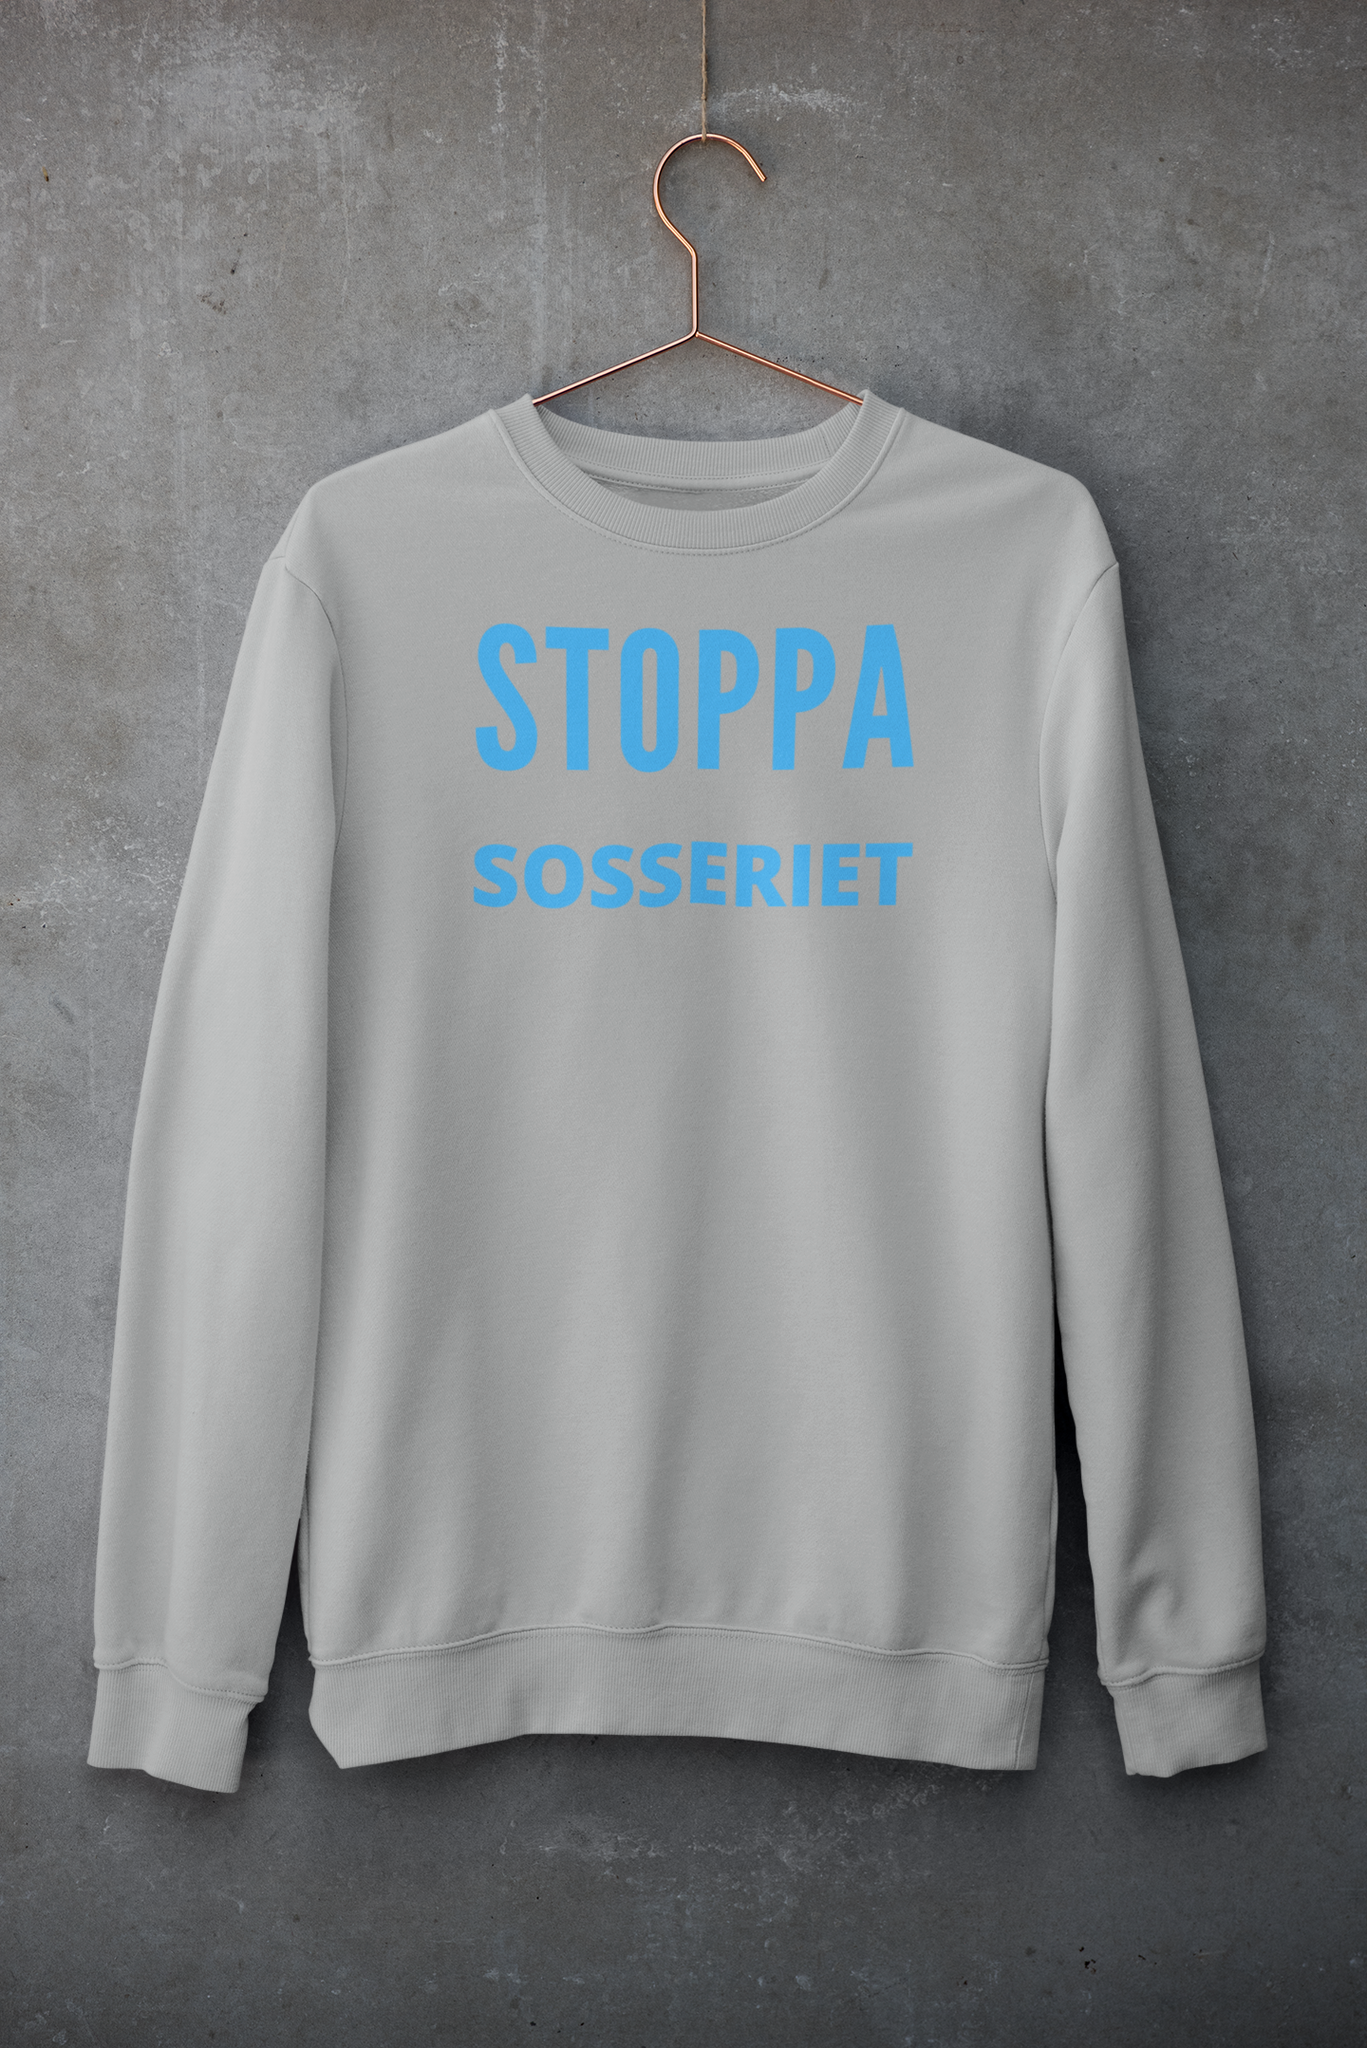 Stoppa Sosseriet Sweatshirt Unisex. - Statements Clothing